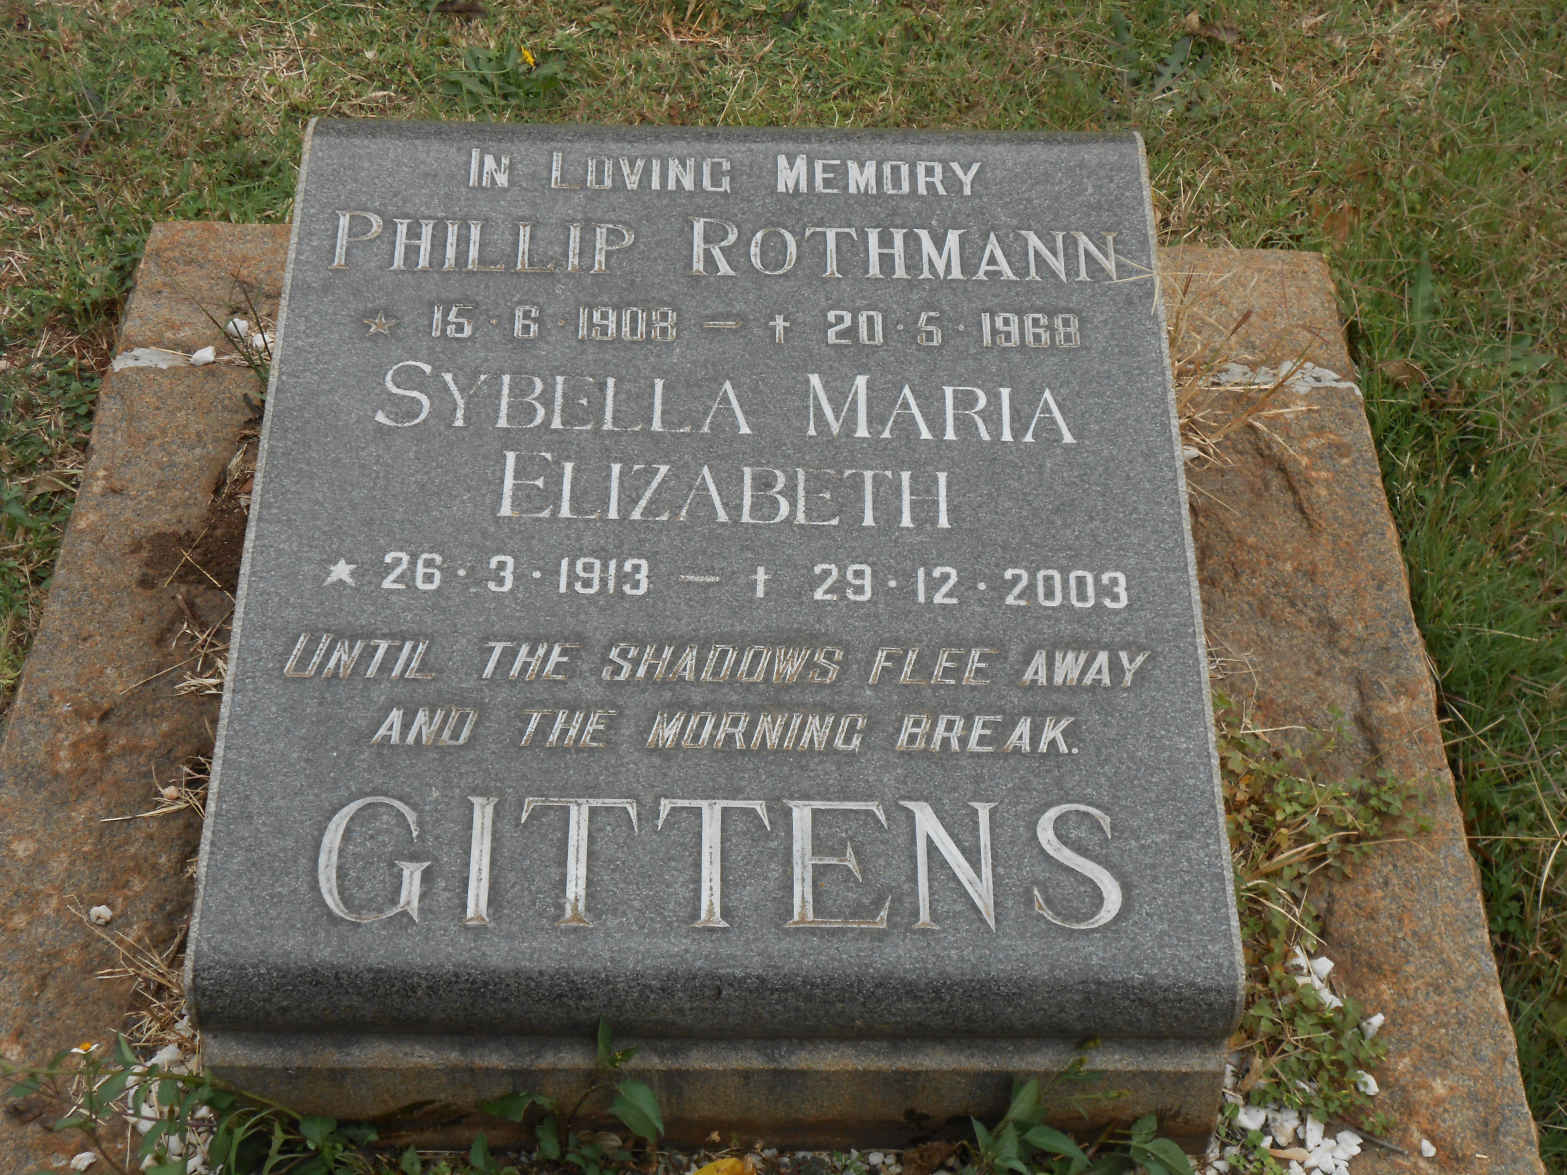 GITTENS Phillip Rothmann 1908-1968 & Sybella Maria Elizabeth 1913-2003